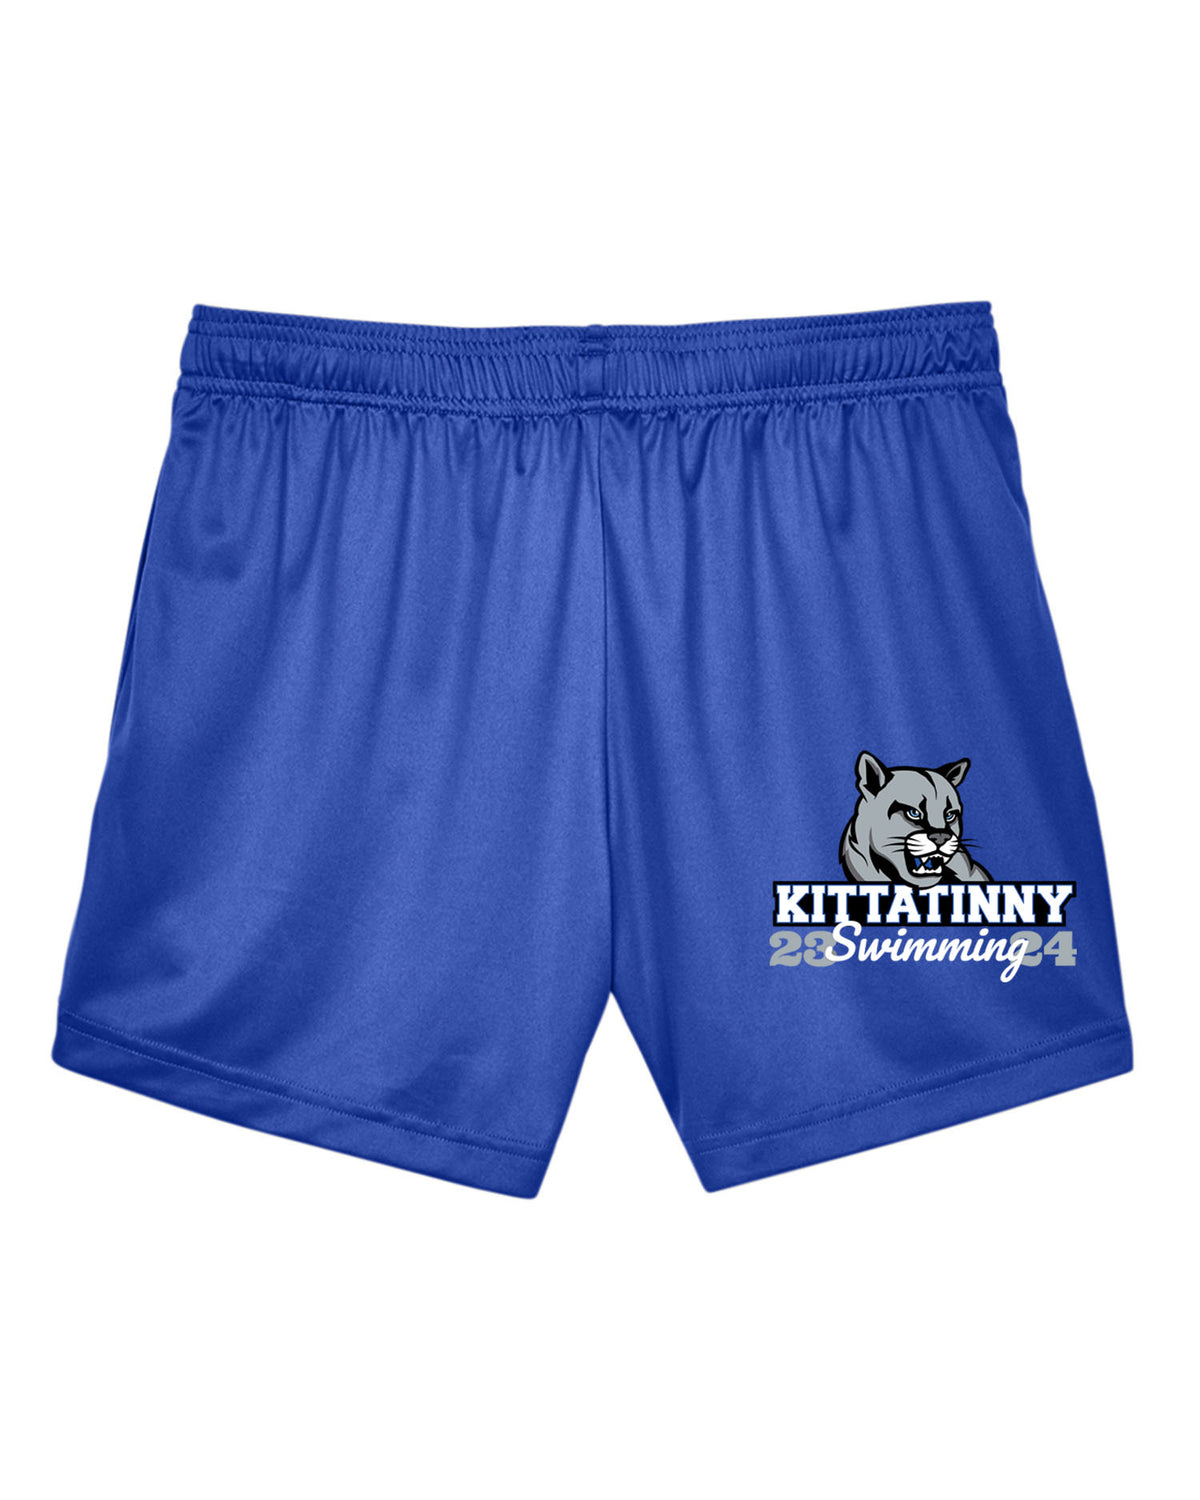 Kittatinny Swimming Ladies Performance Design 2 Shorts